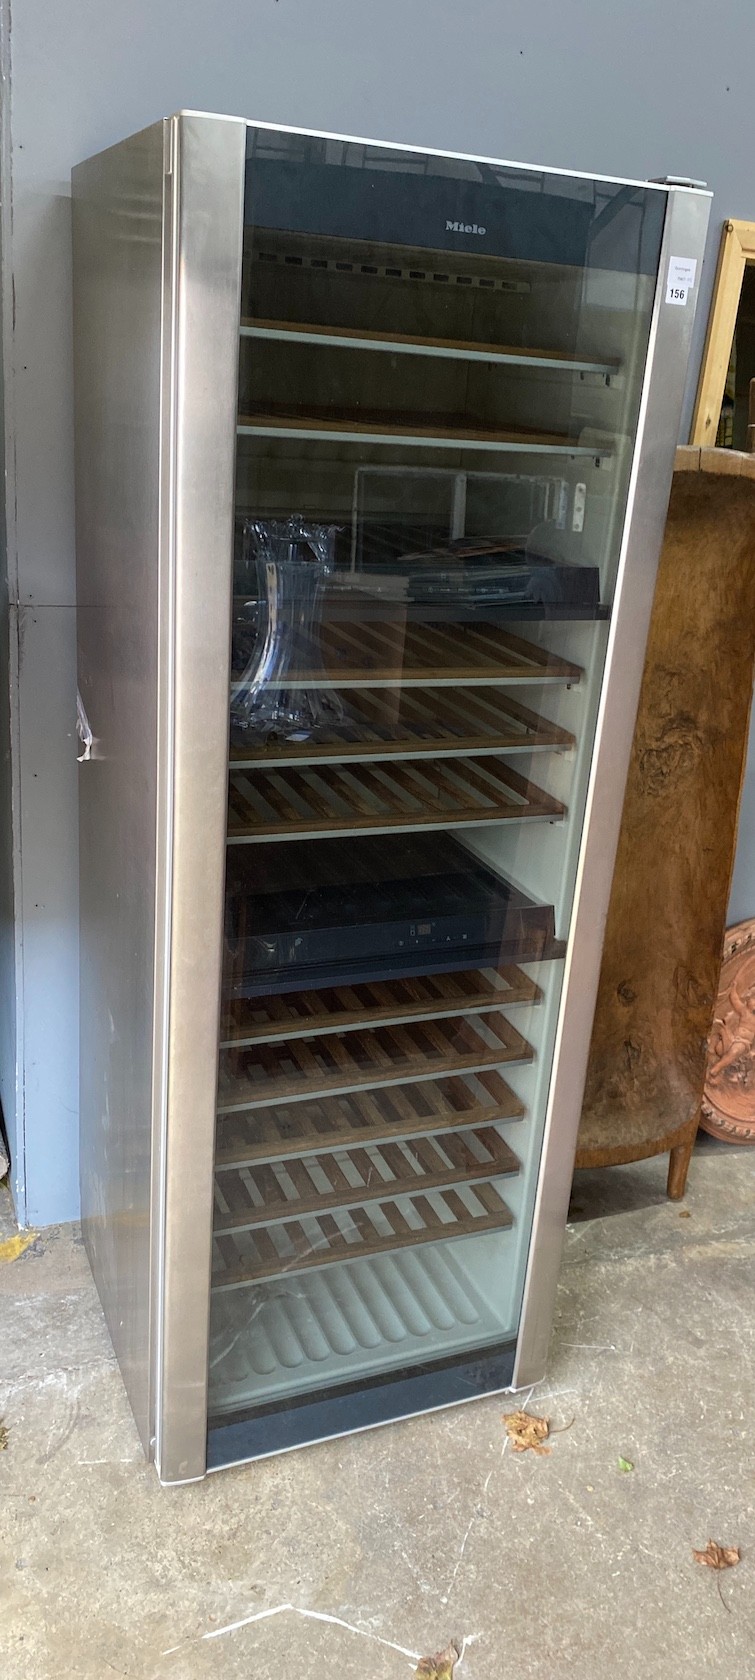 A Miele free standing wine storage fridge, (Pat tested), width 65cm, depth 66cm, height 184cm